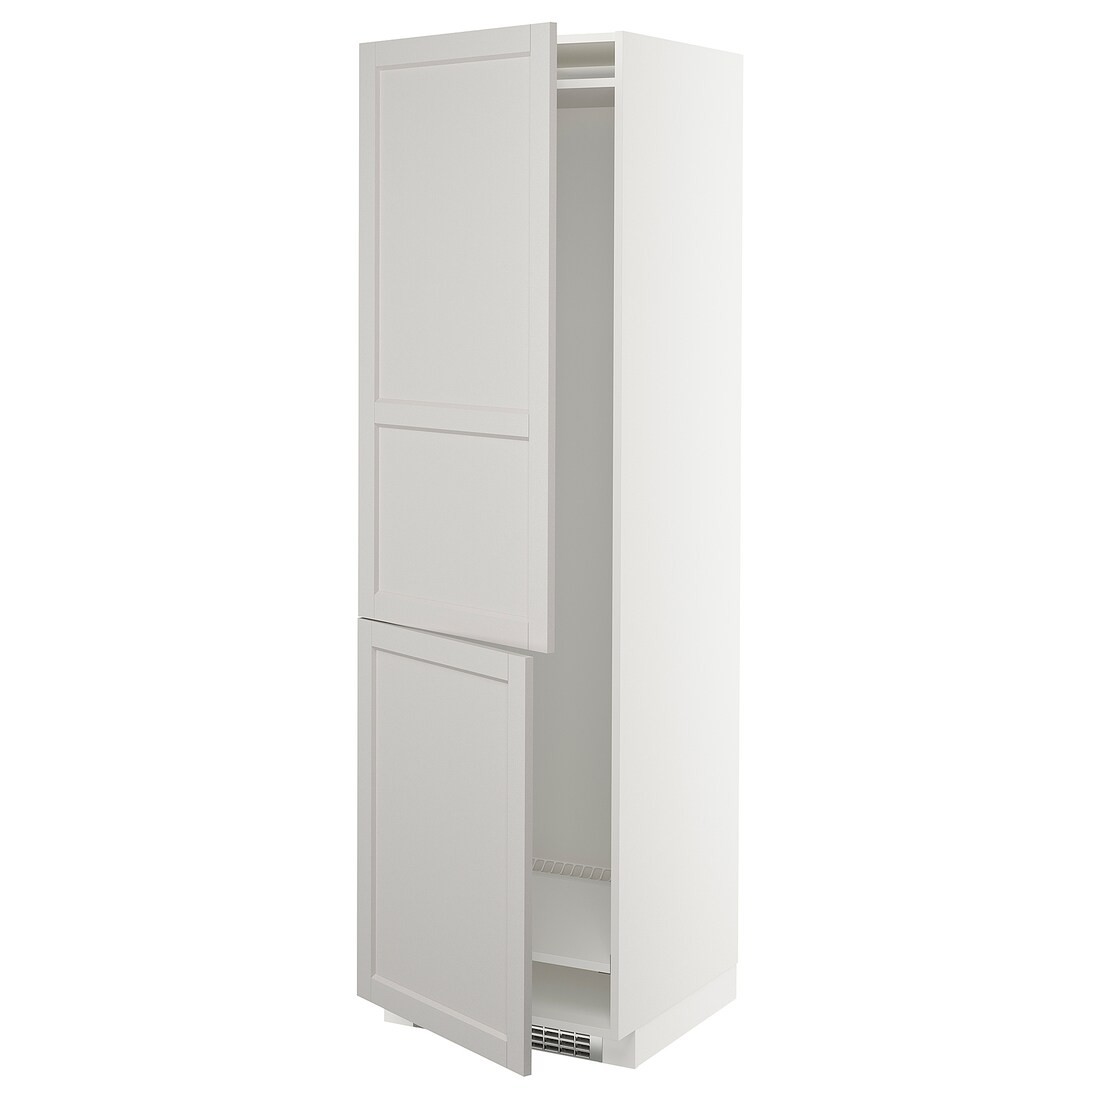 METOD МЕТОД Высокий шкаф для холодильника / морозильника, белый / Lerhyttan светло-серый, 60x60x200 см